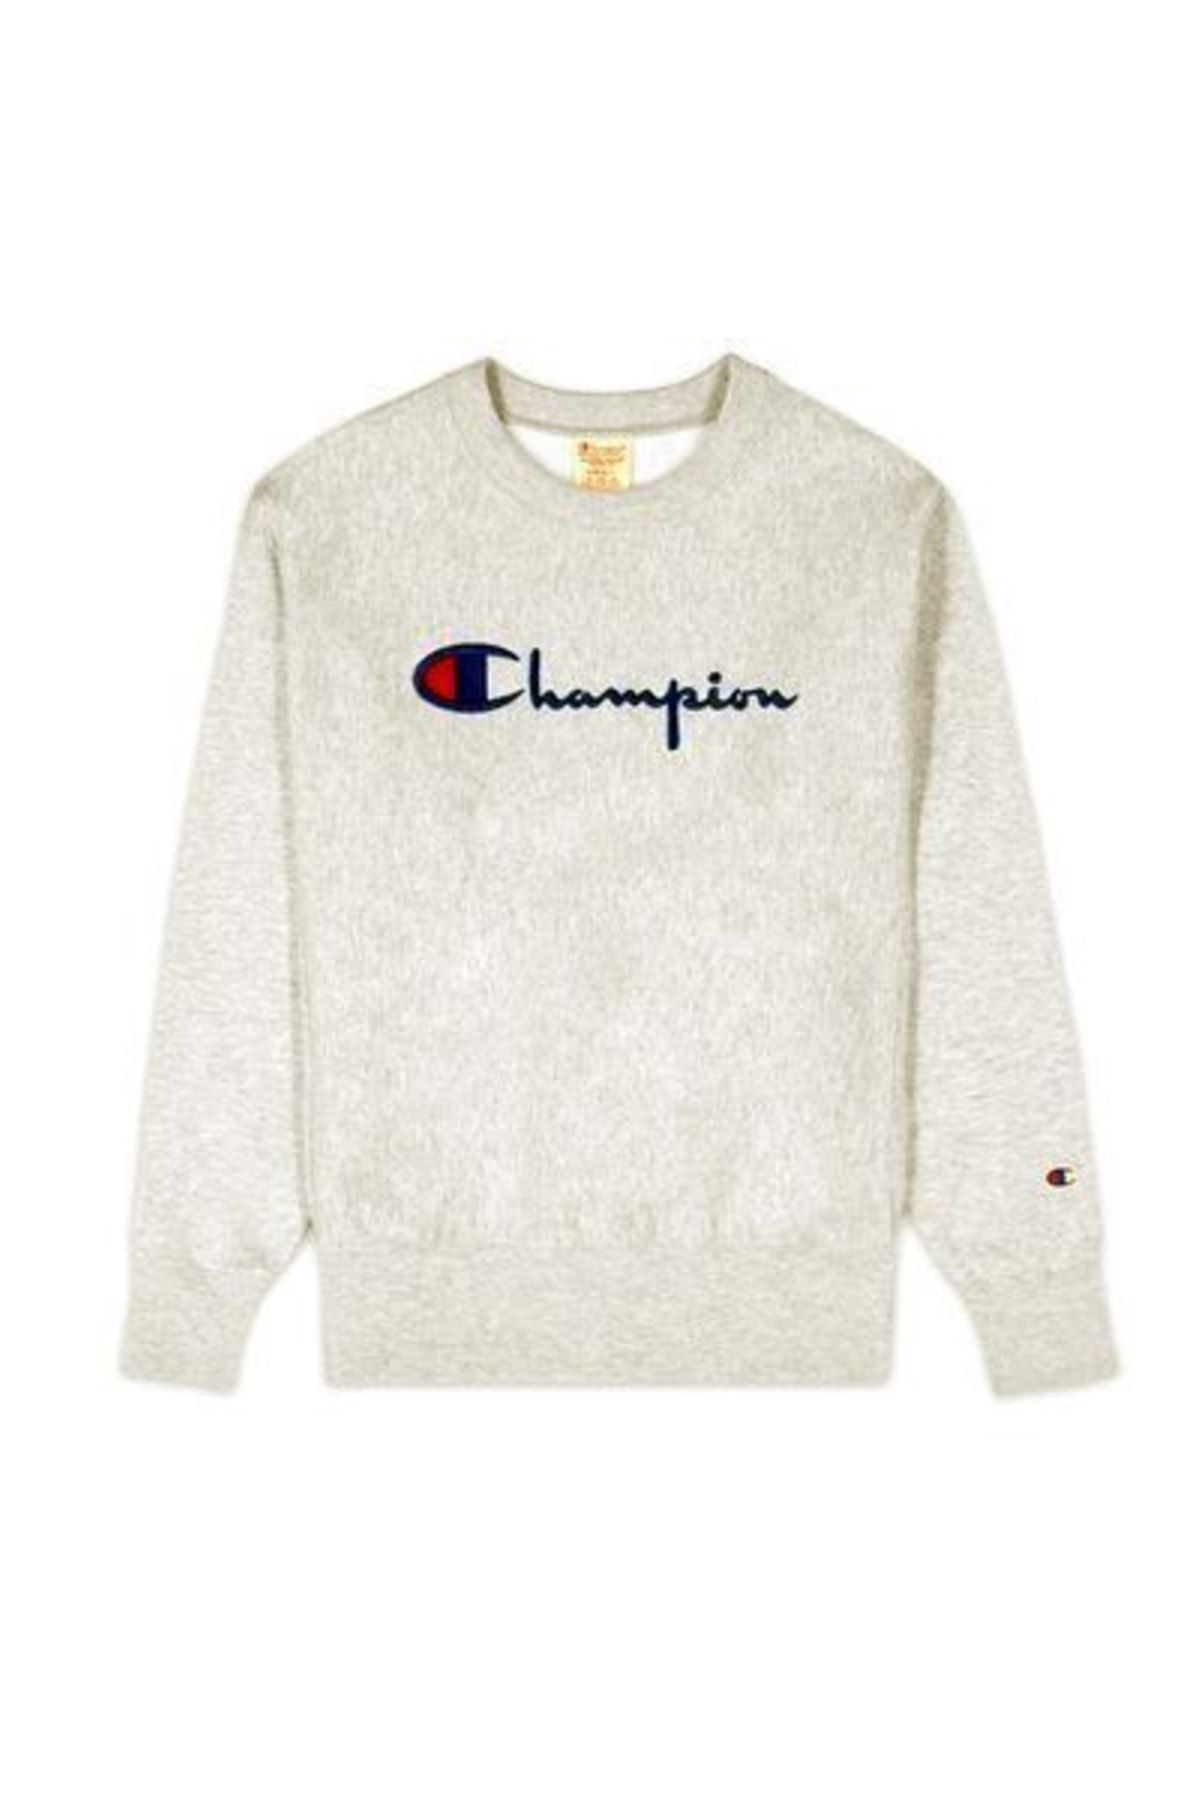 Glat Adept Om Champion Sweatshirt - White - Regular fit - Trendyol